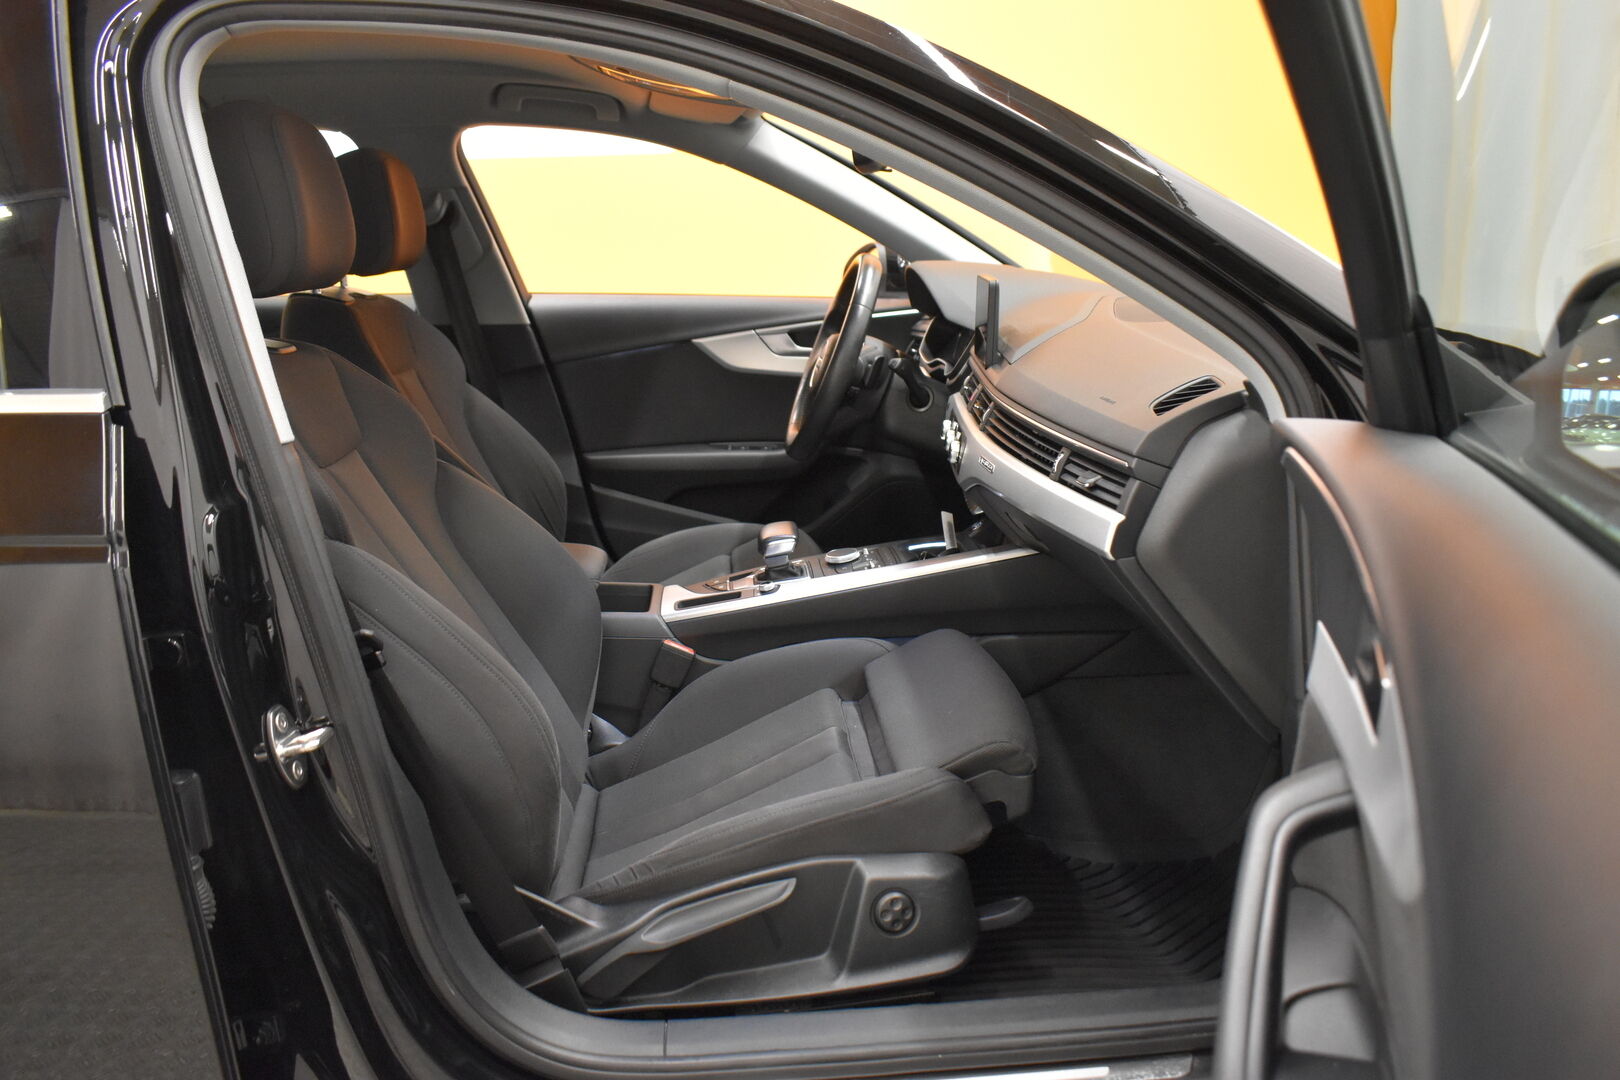 Musta Farmari, Audi A4 – COP-309